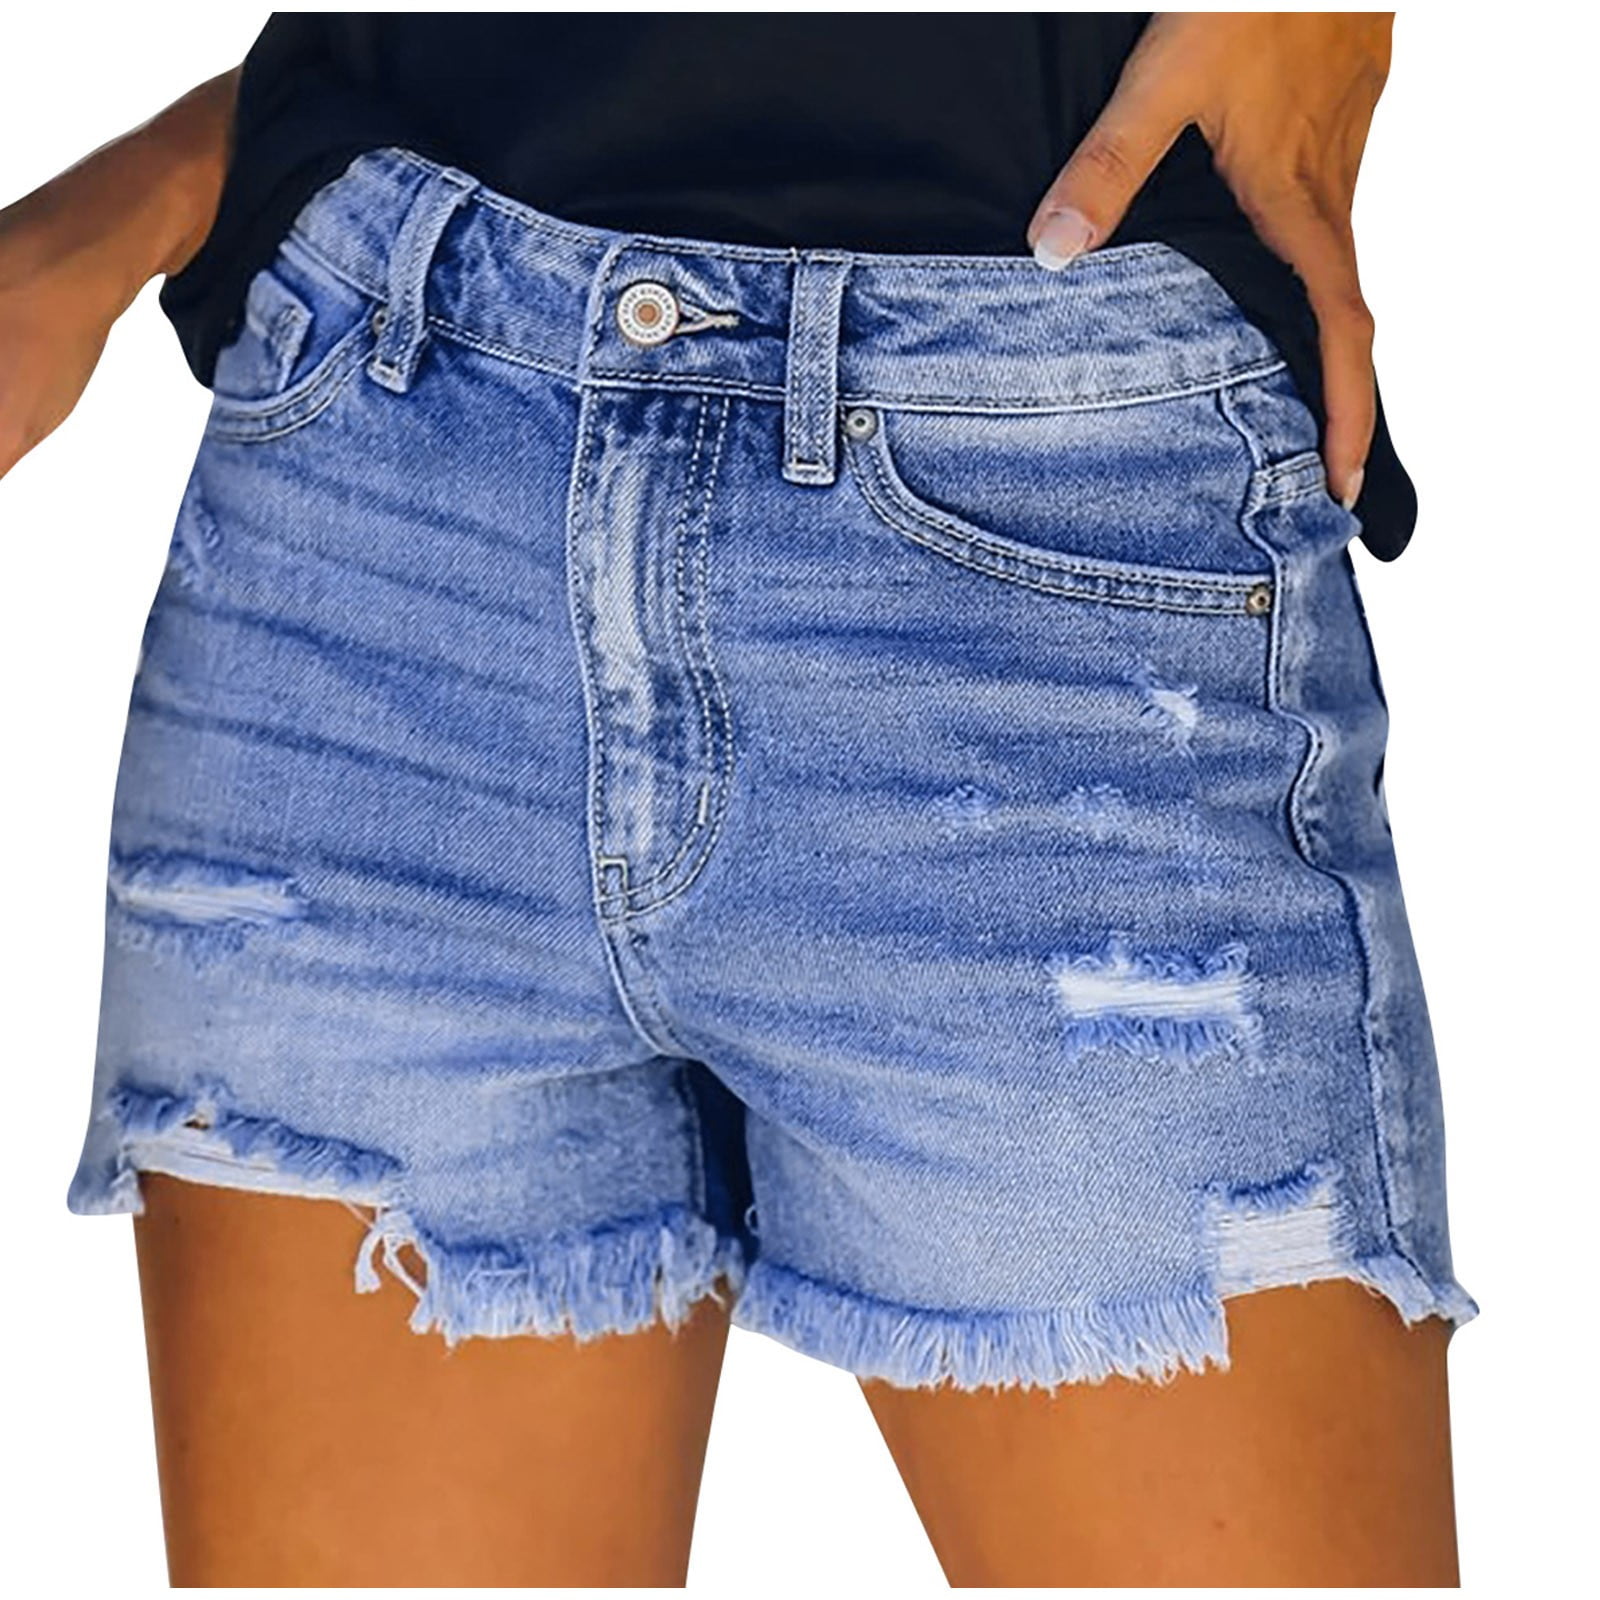 Shorts for Women Denim Printing Short Summer Mid Waist Stretchy Pockets Jean  Shorts Ripped Raw Hem Distressed Denim Shorts,Light Blue-02,L 